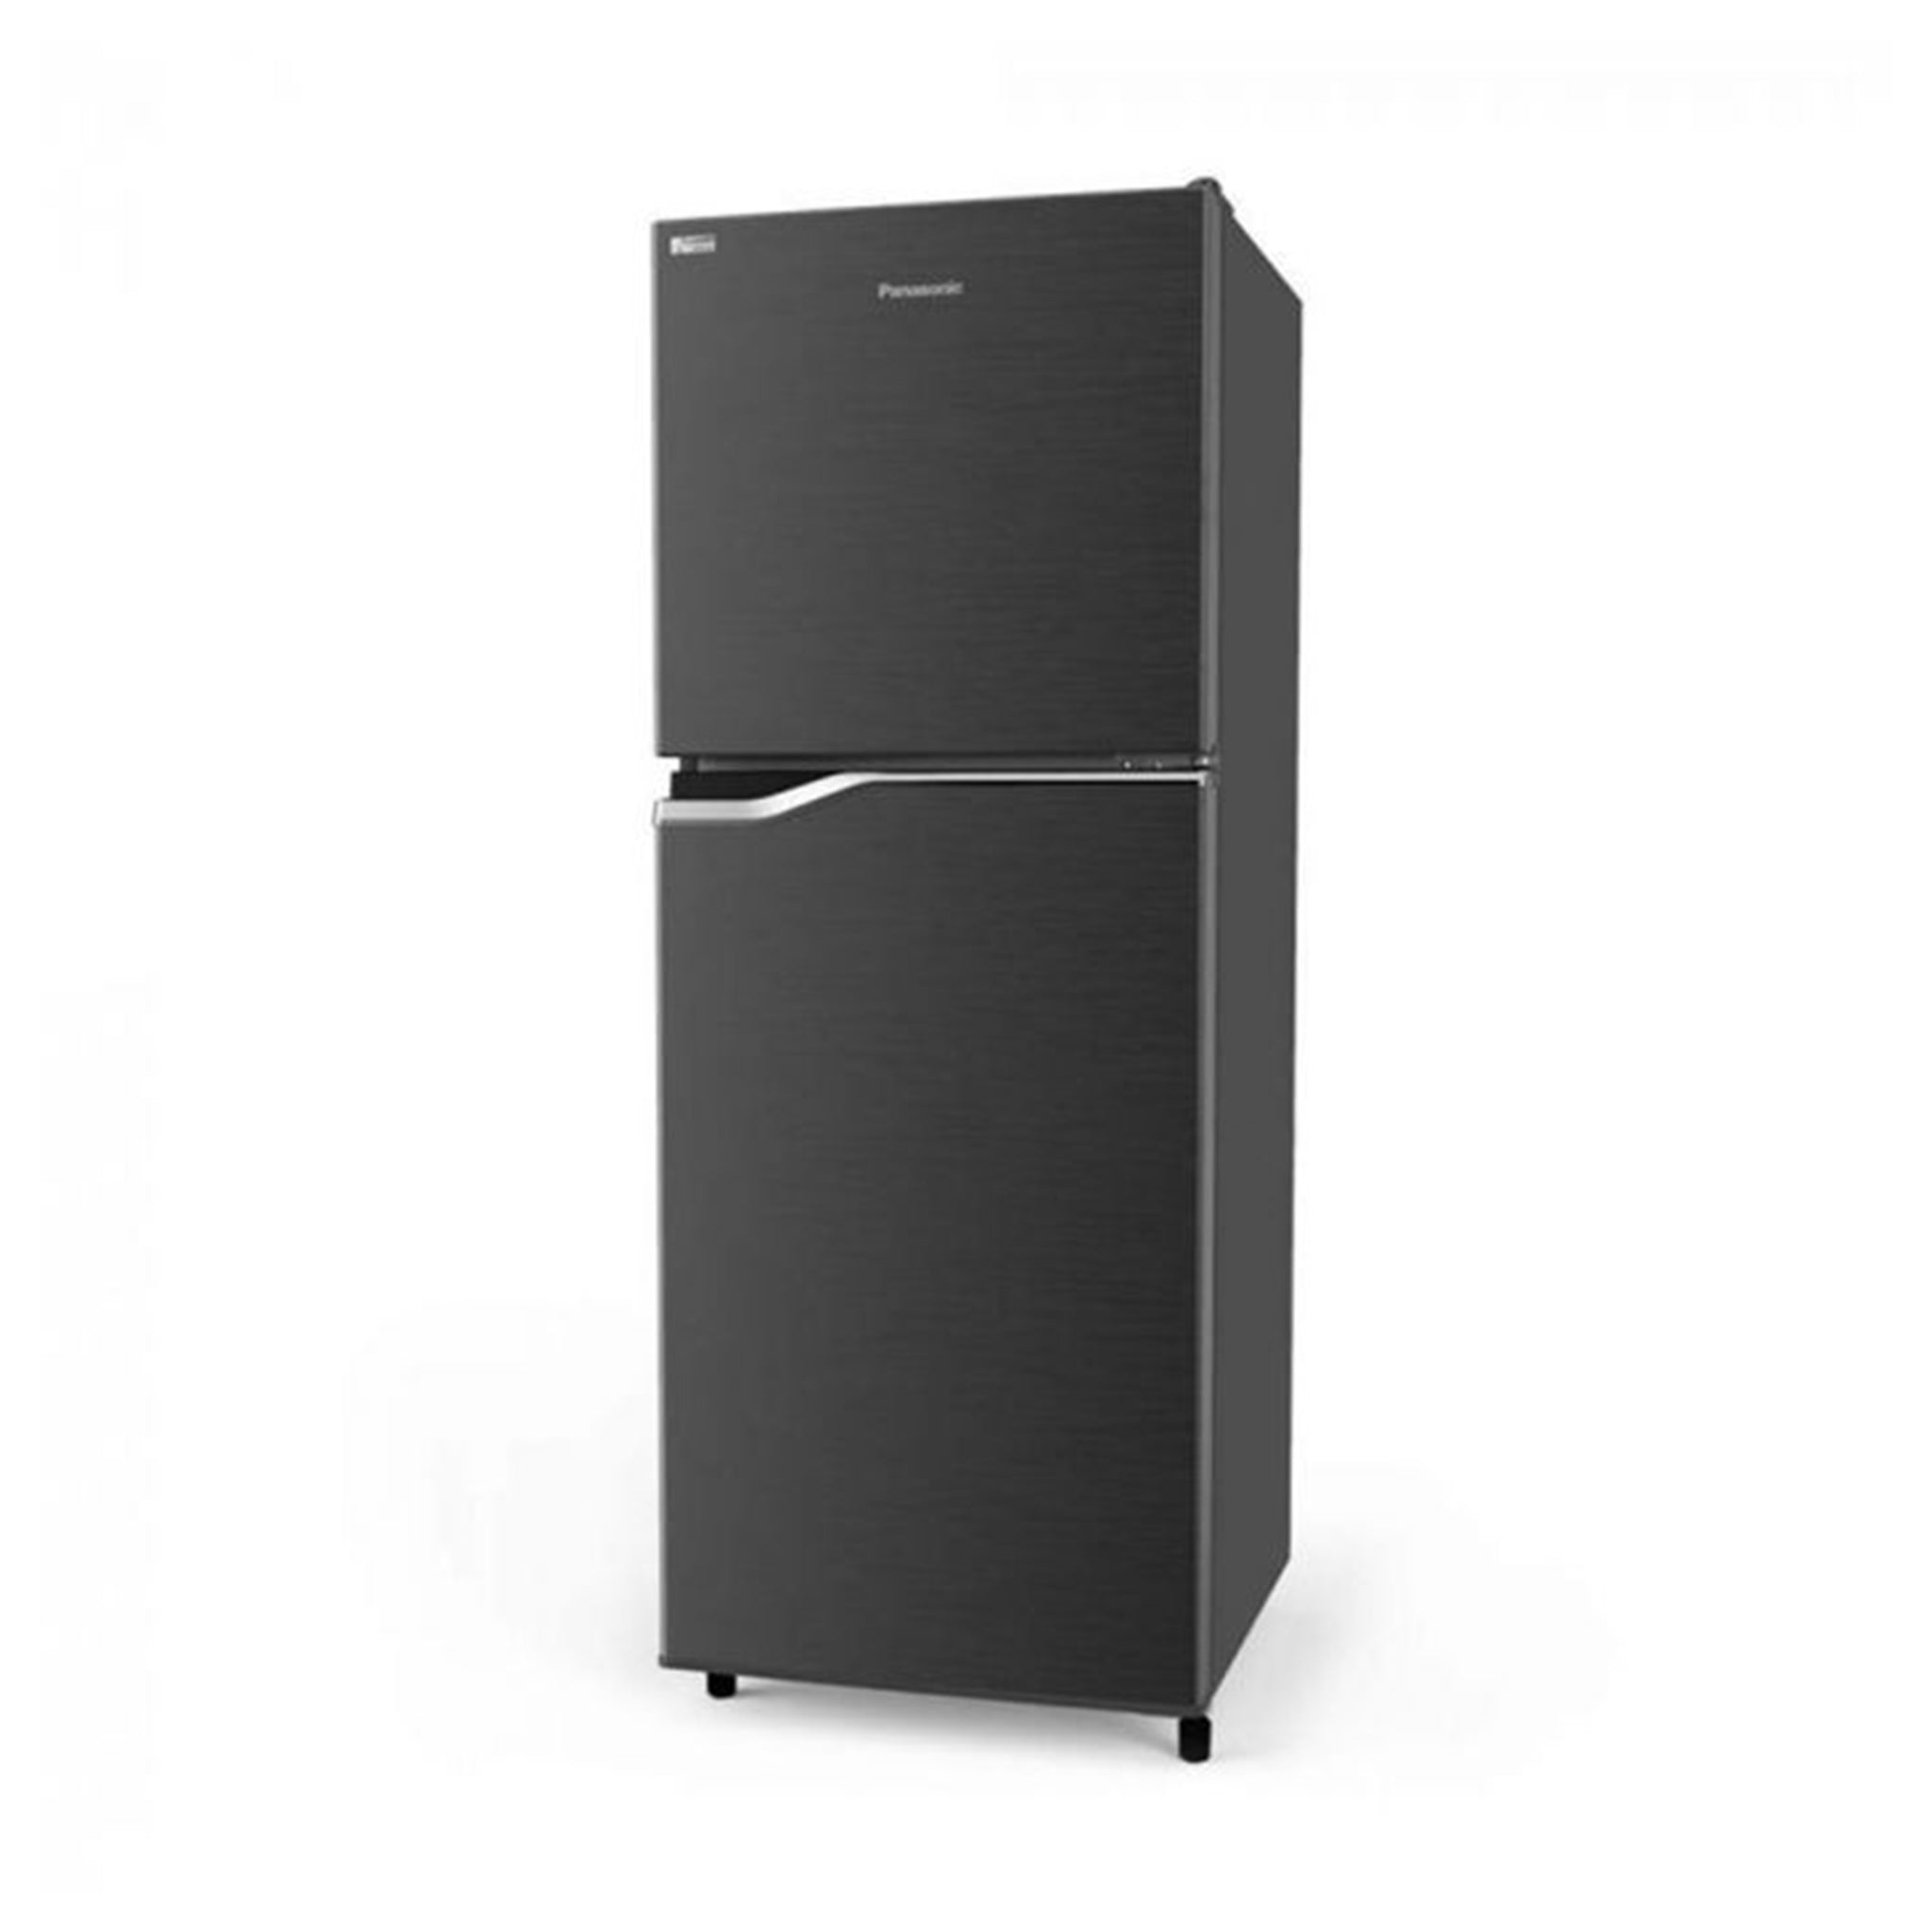 PANASONIC NR-BP230VD 2-Door Top Freezer Fridge Inverter Refrigerator Panasonic